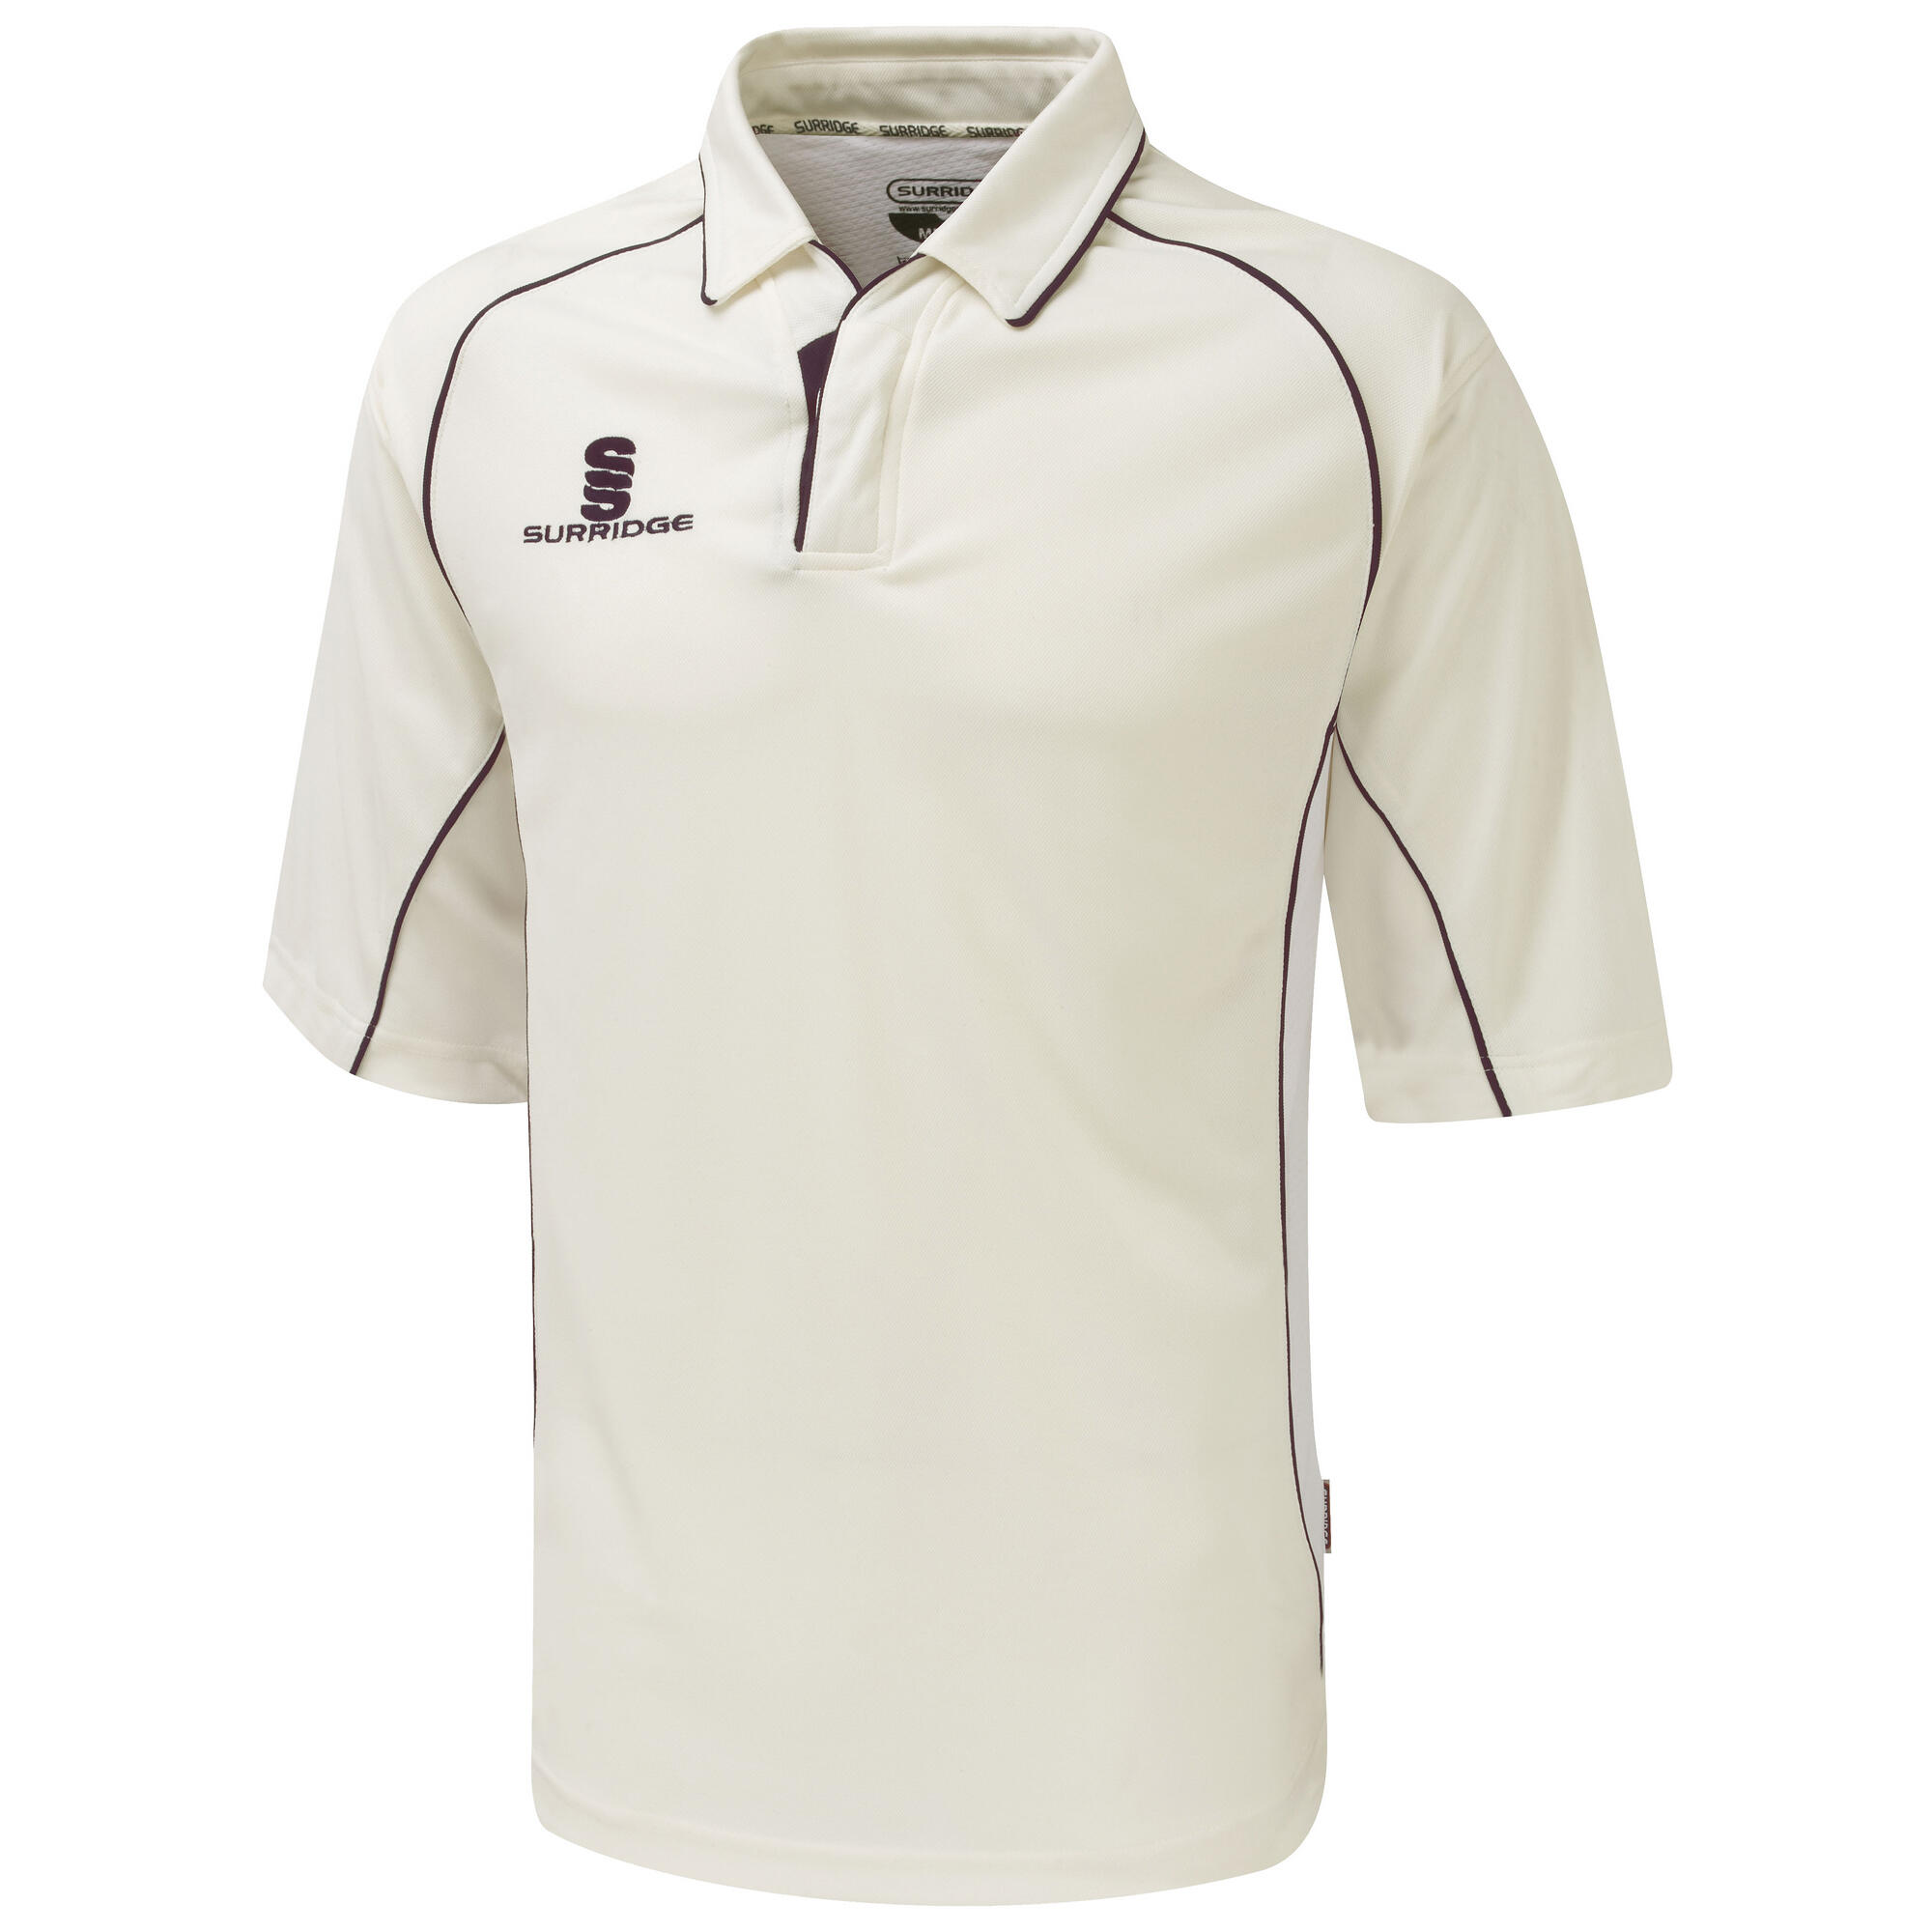 Mens/Youth Premier Sports 3/4 Sleeve Polo Shirt (White/Maroon trim) 1/1